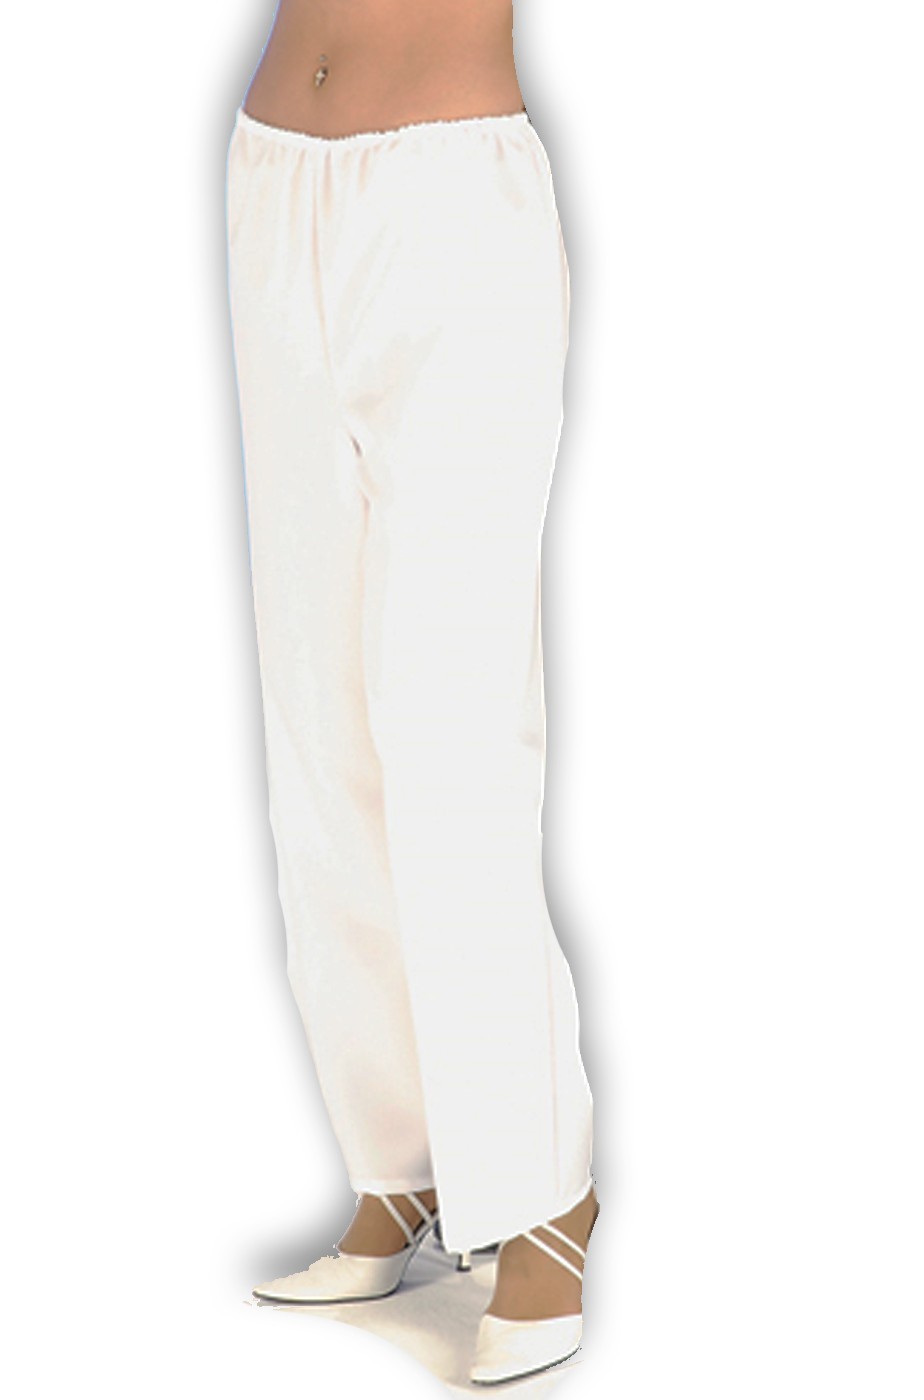 Pantalone bianco unisex multitaglia per cosplay